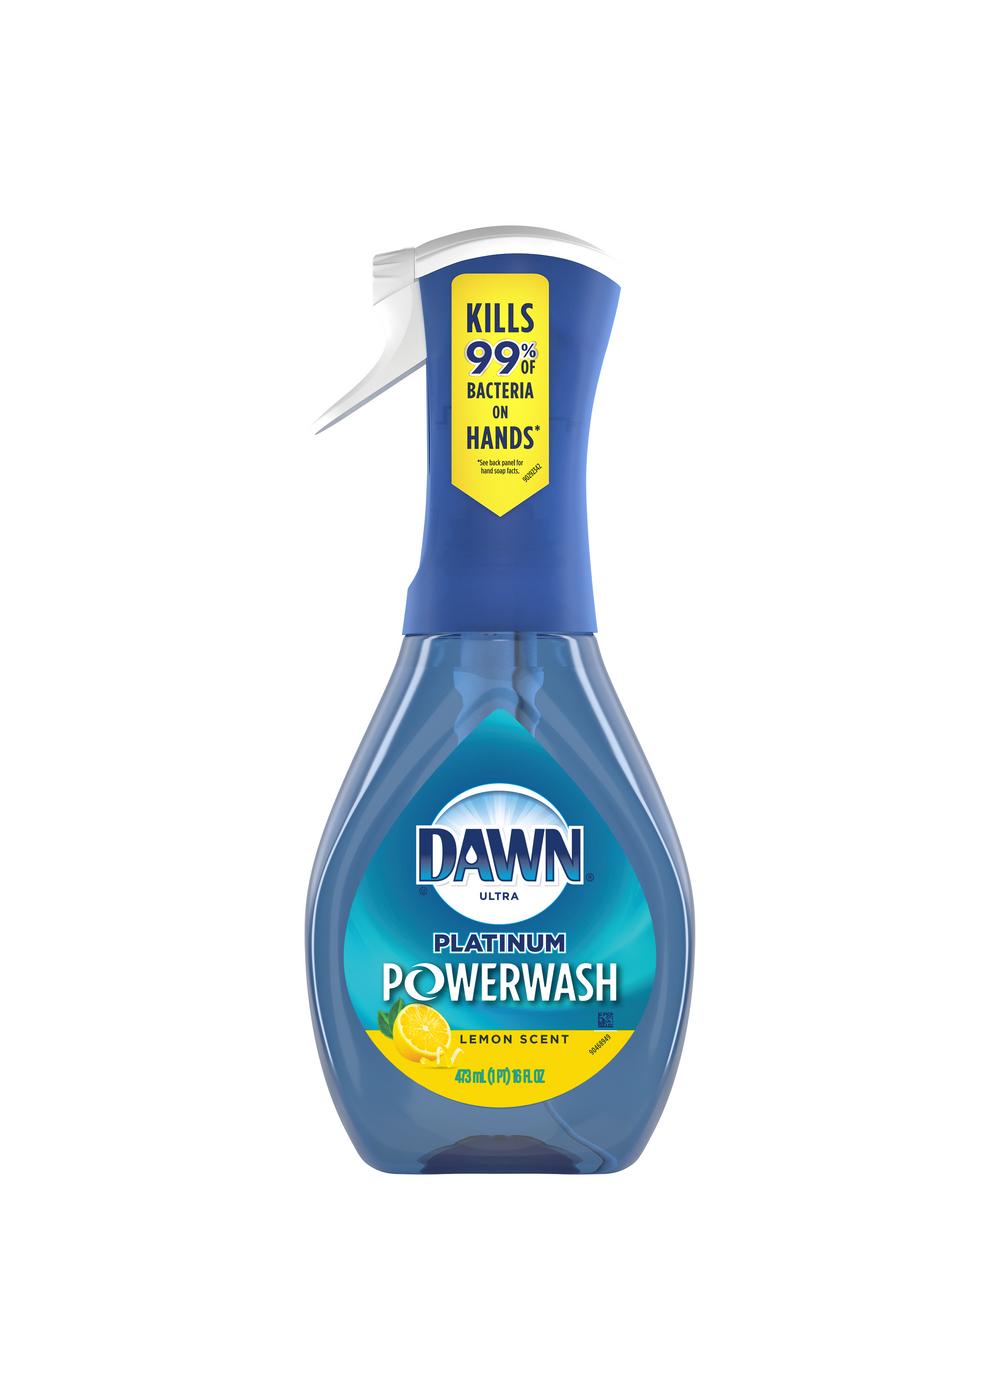 Dawn Platinum Powerwash Lemon Scent Dish Spray; image 1 of 5